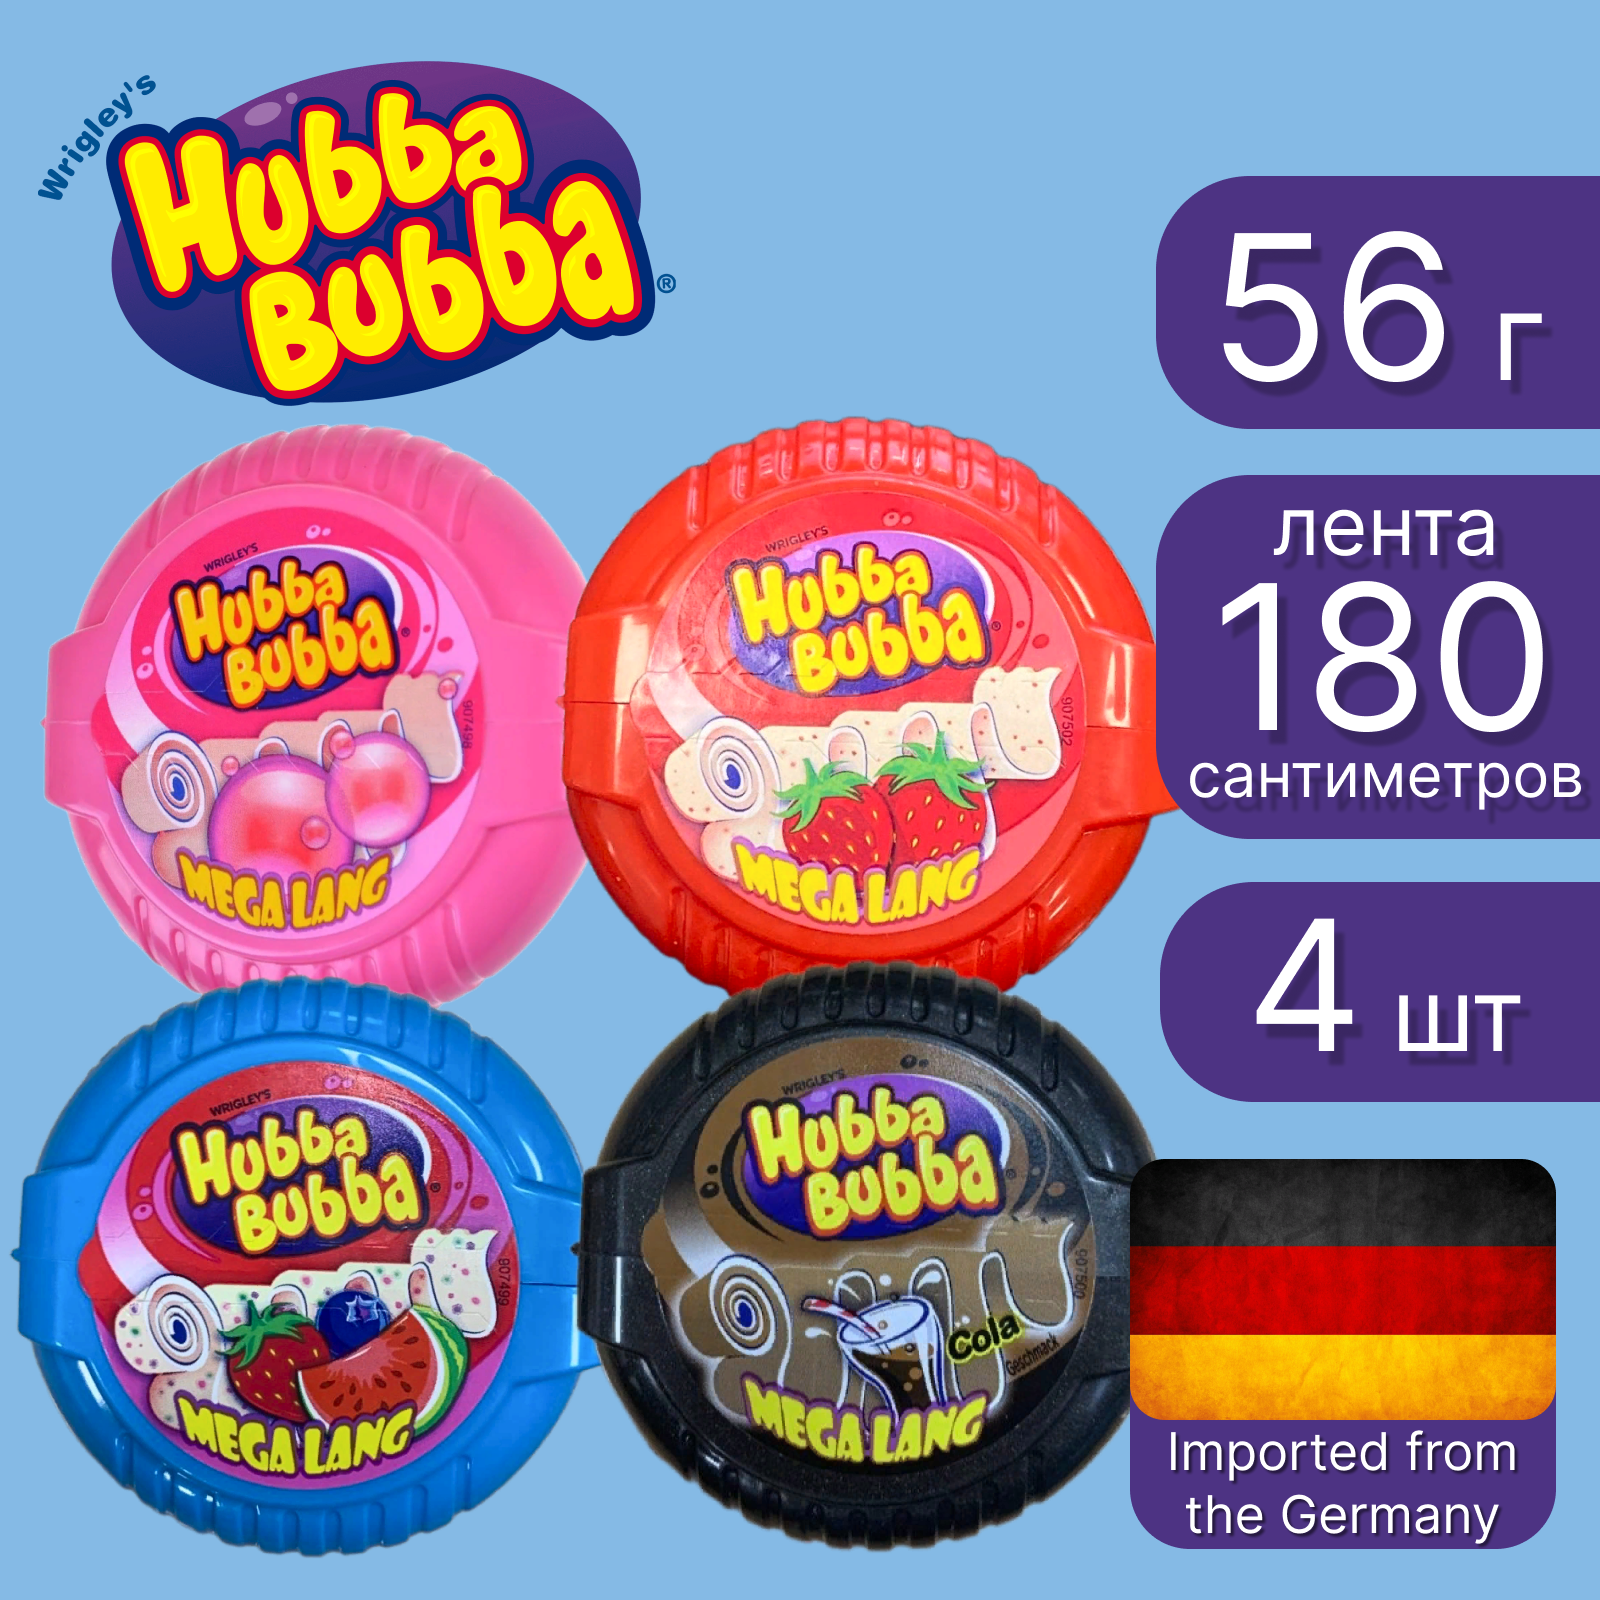 Жевательная резинка Wrigley's Hubba Bubba Mega Long 4 вкуса (Германия), 4 x 56 г